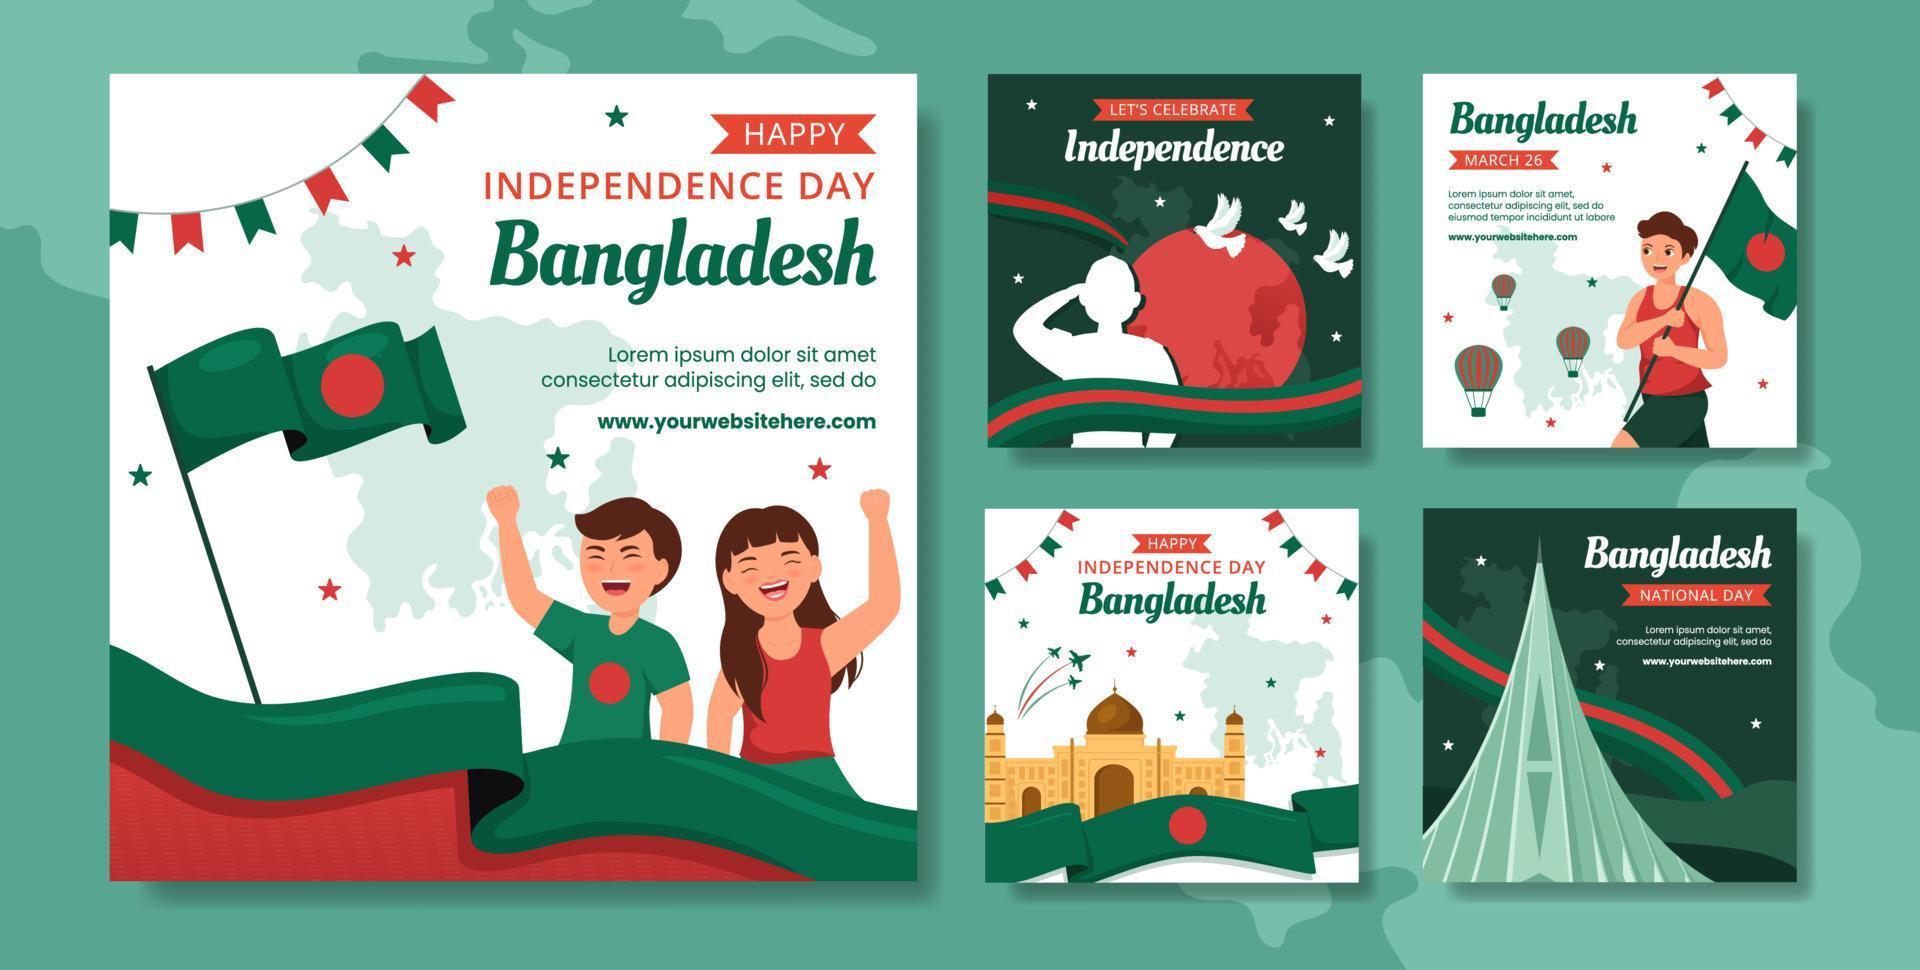 Happy Independence Bangladesh Day Social Media Post Flat Cartoon Hand Drawn Templates Illustration vector